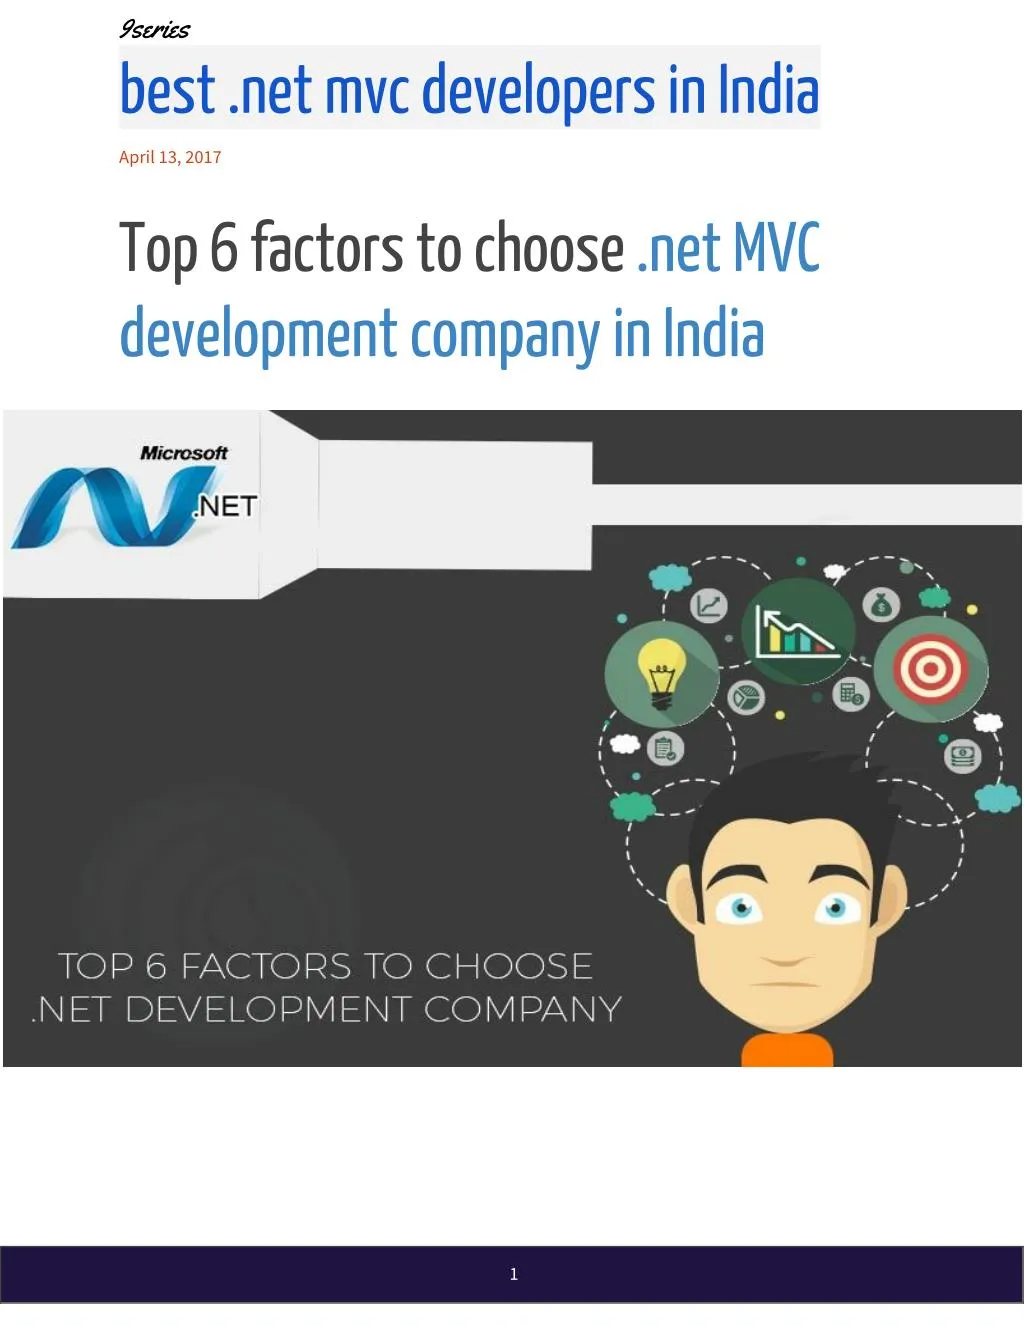 9series best net mvc developers in india